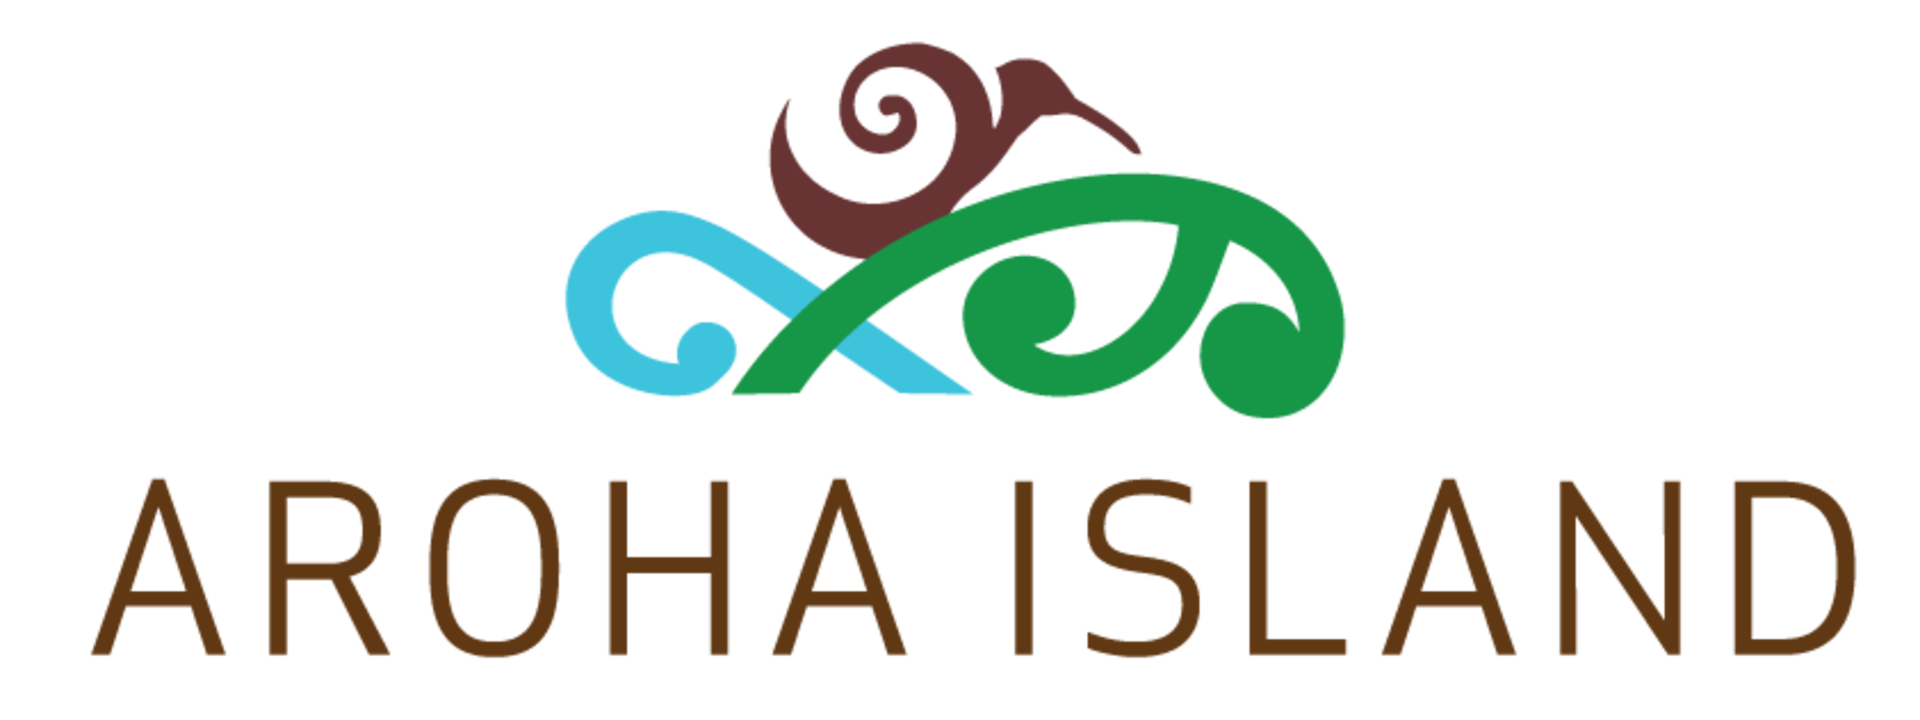 final_aroha_big_logo-2.png